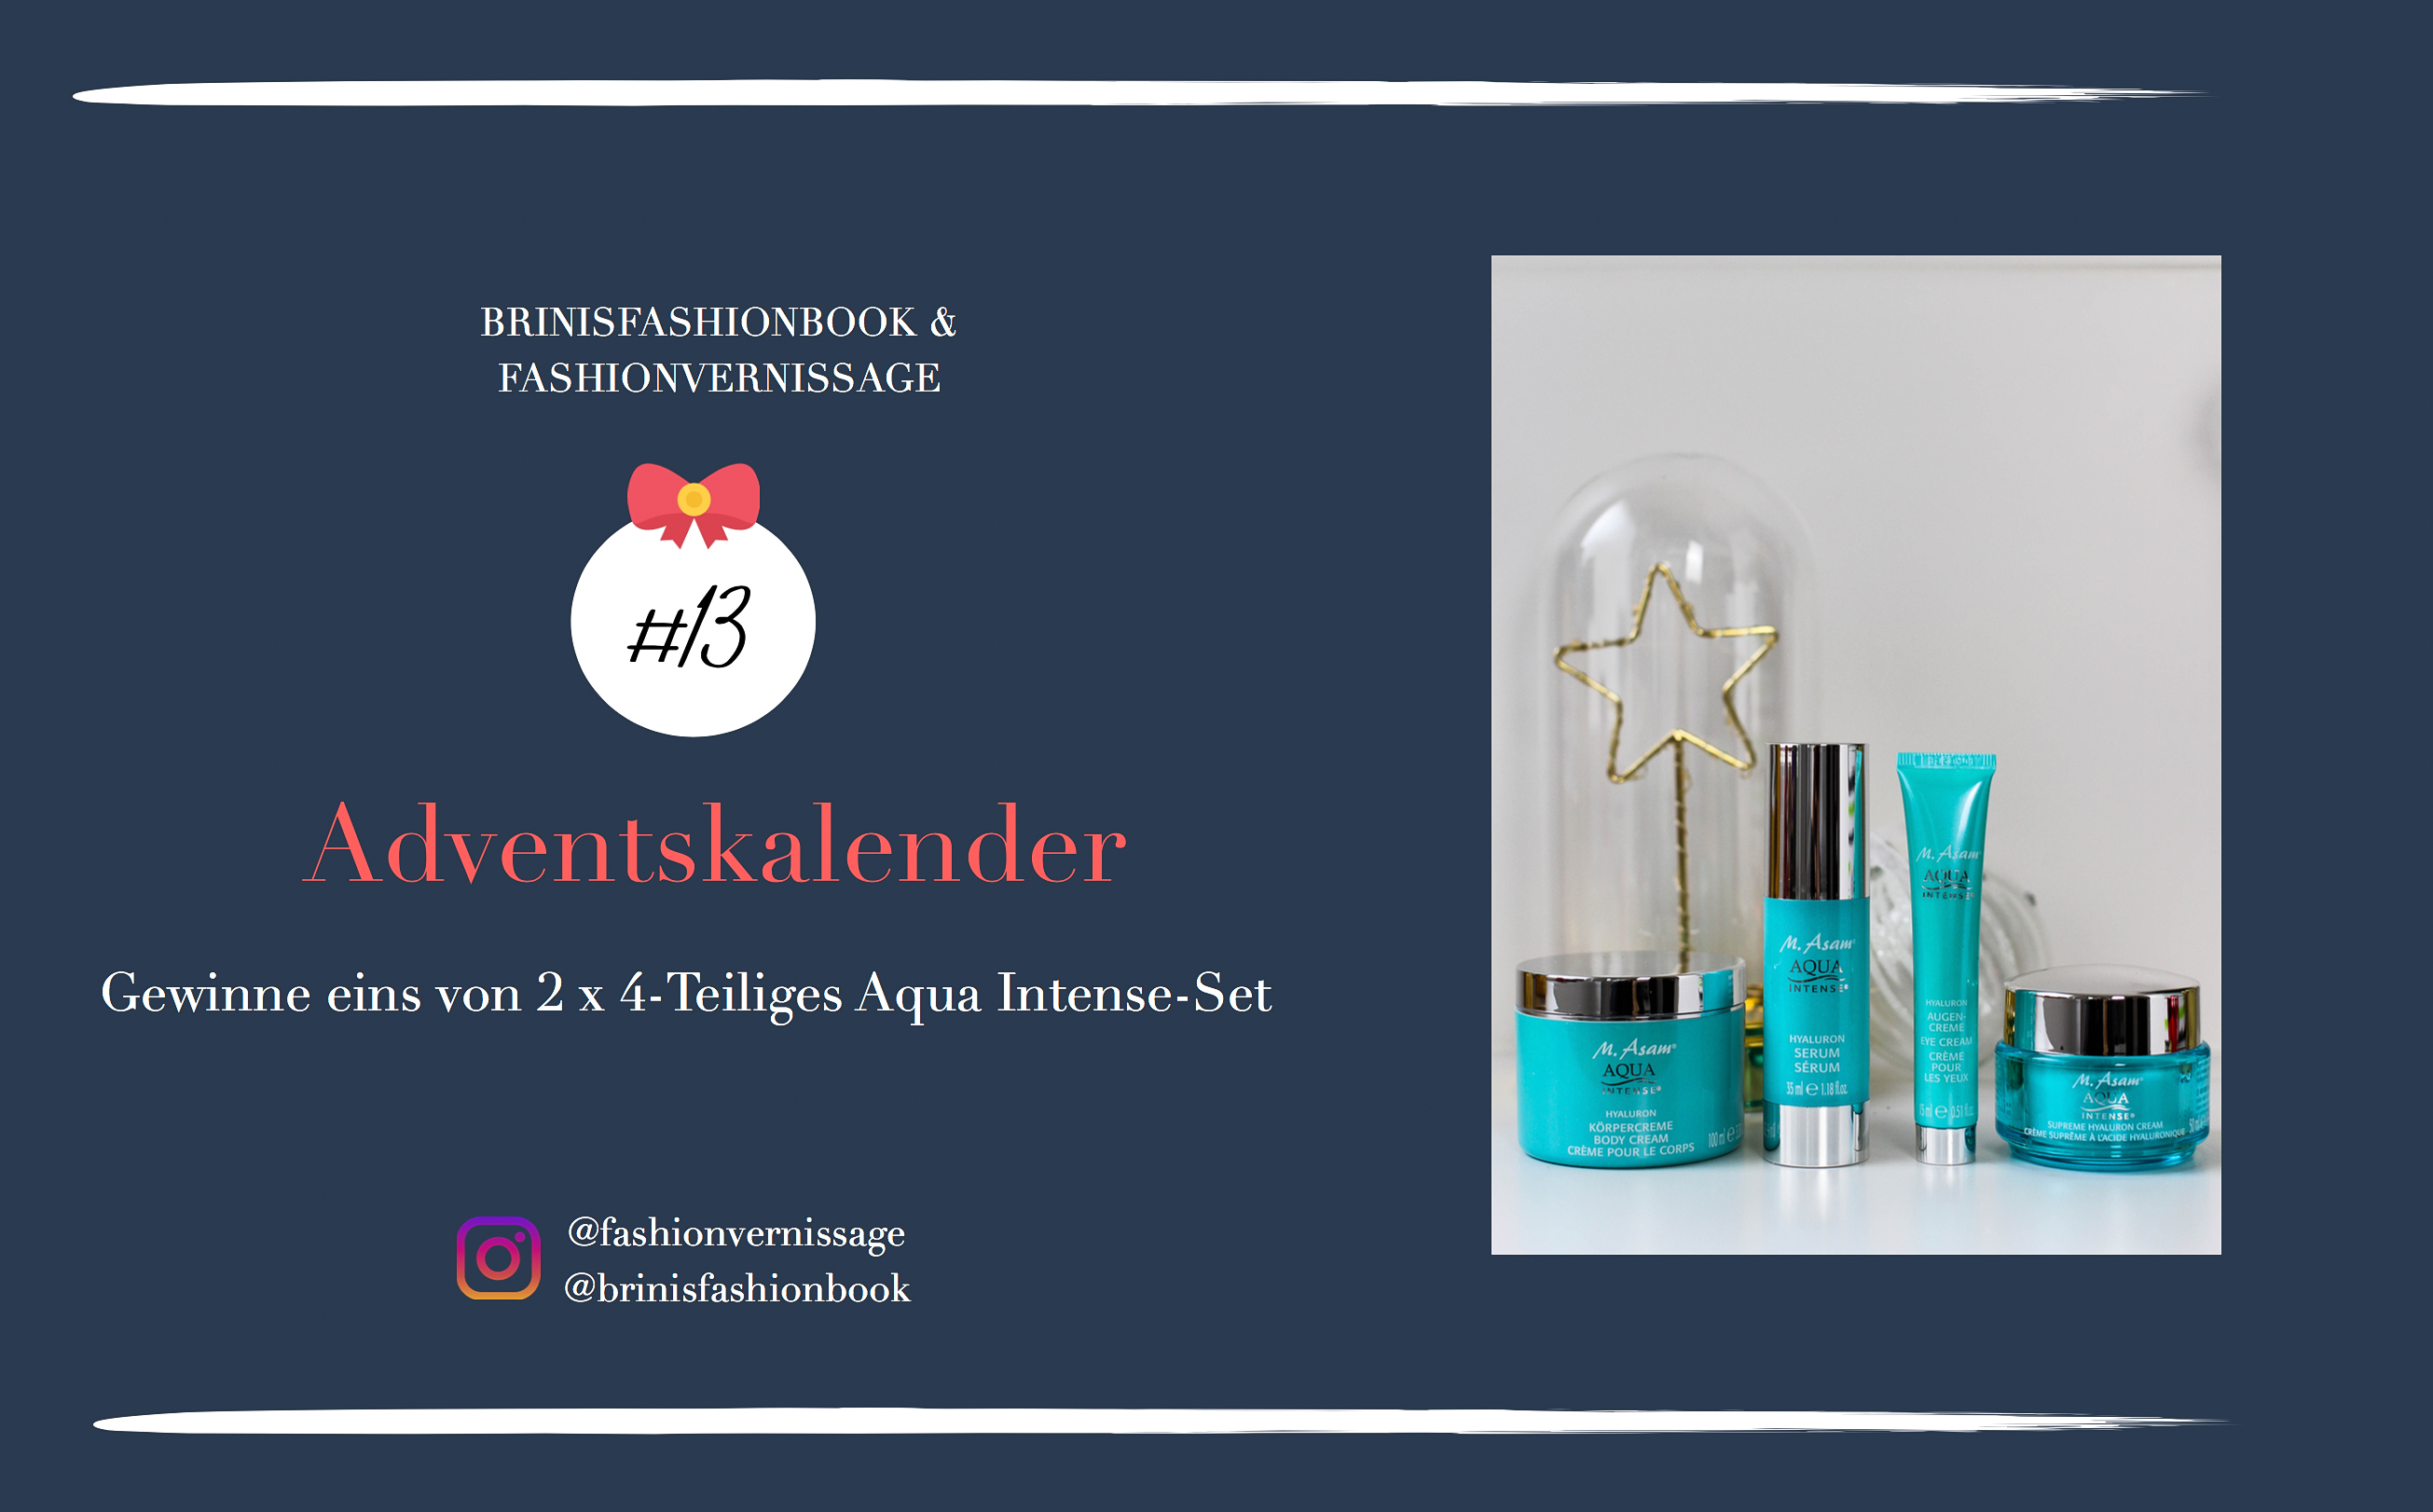 Adventskalender Blogger Deutschland 4-Teiliges Aqua Intense-Set Asambeauty Weihnachtsgeschenk Idee Beauty-Paket Gewinnspiel